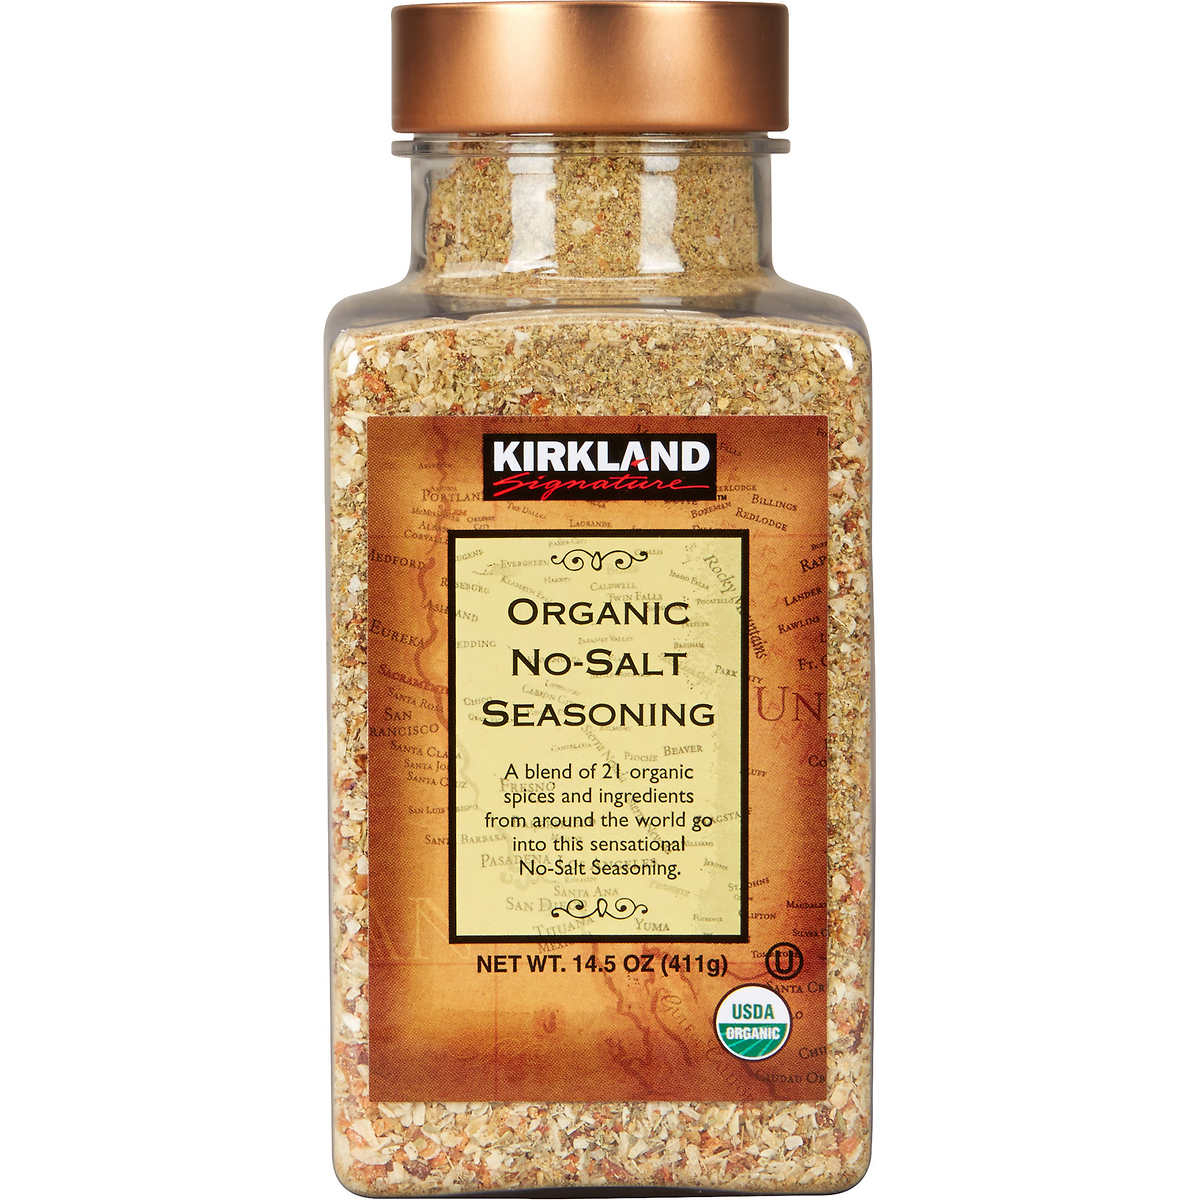 Kirkland Signature Organic No-Salt Seasoning, 14.5 Oz